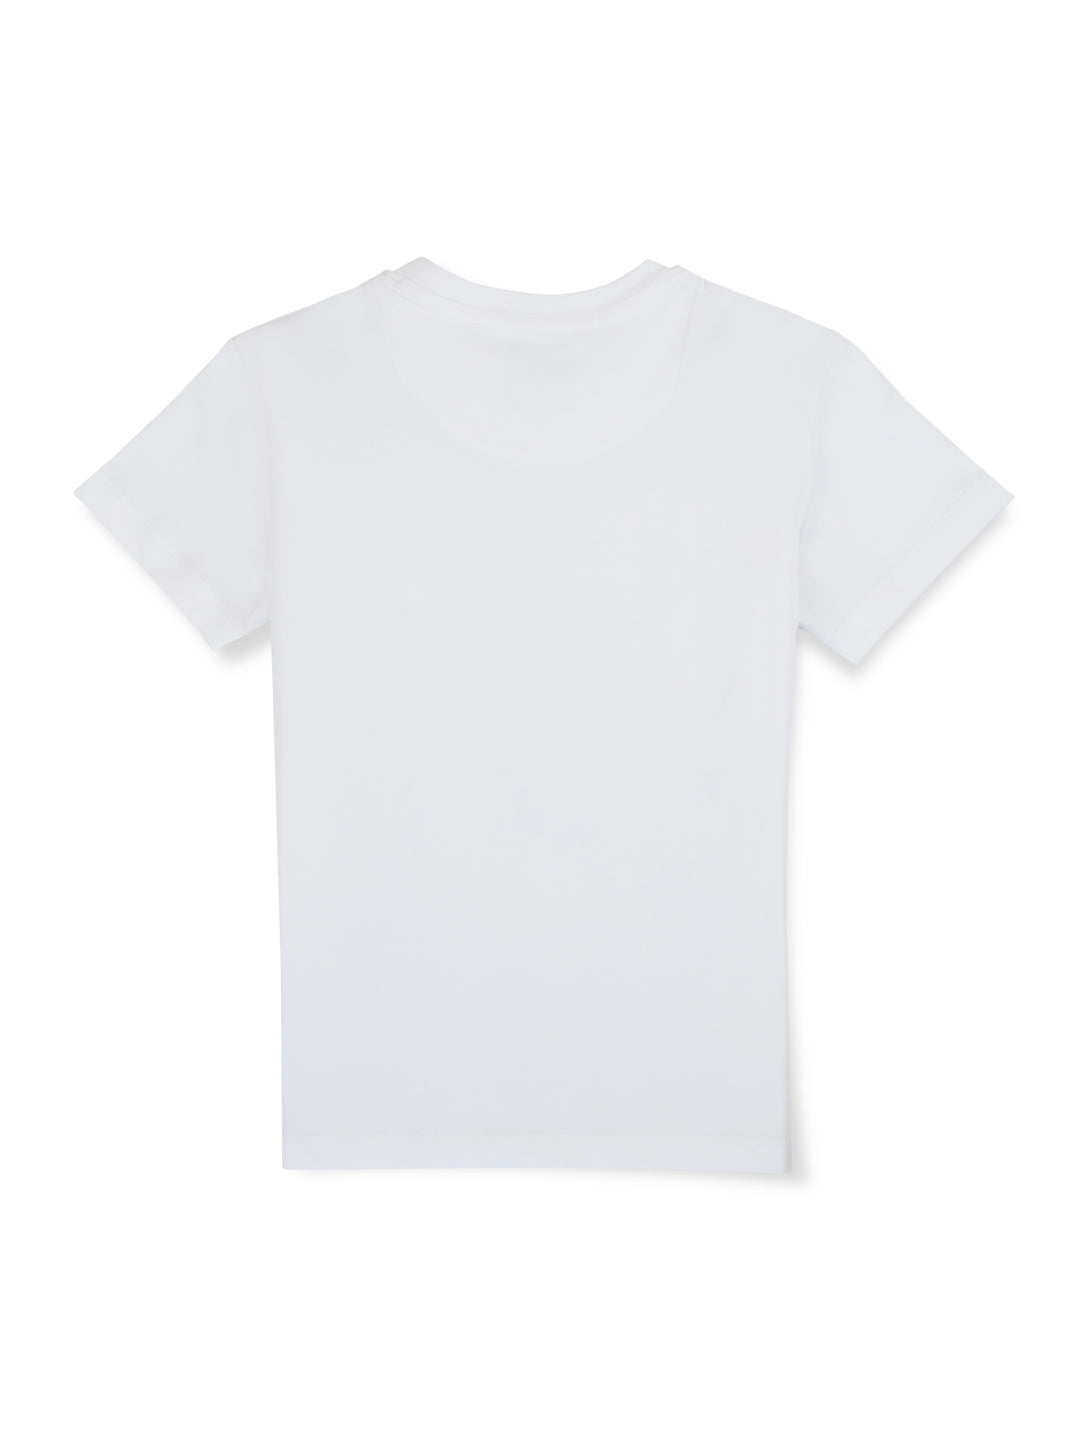 Boys White Typographic Print Cotton T-Shirt Half Sleeves